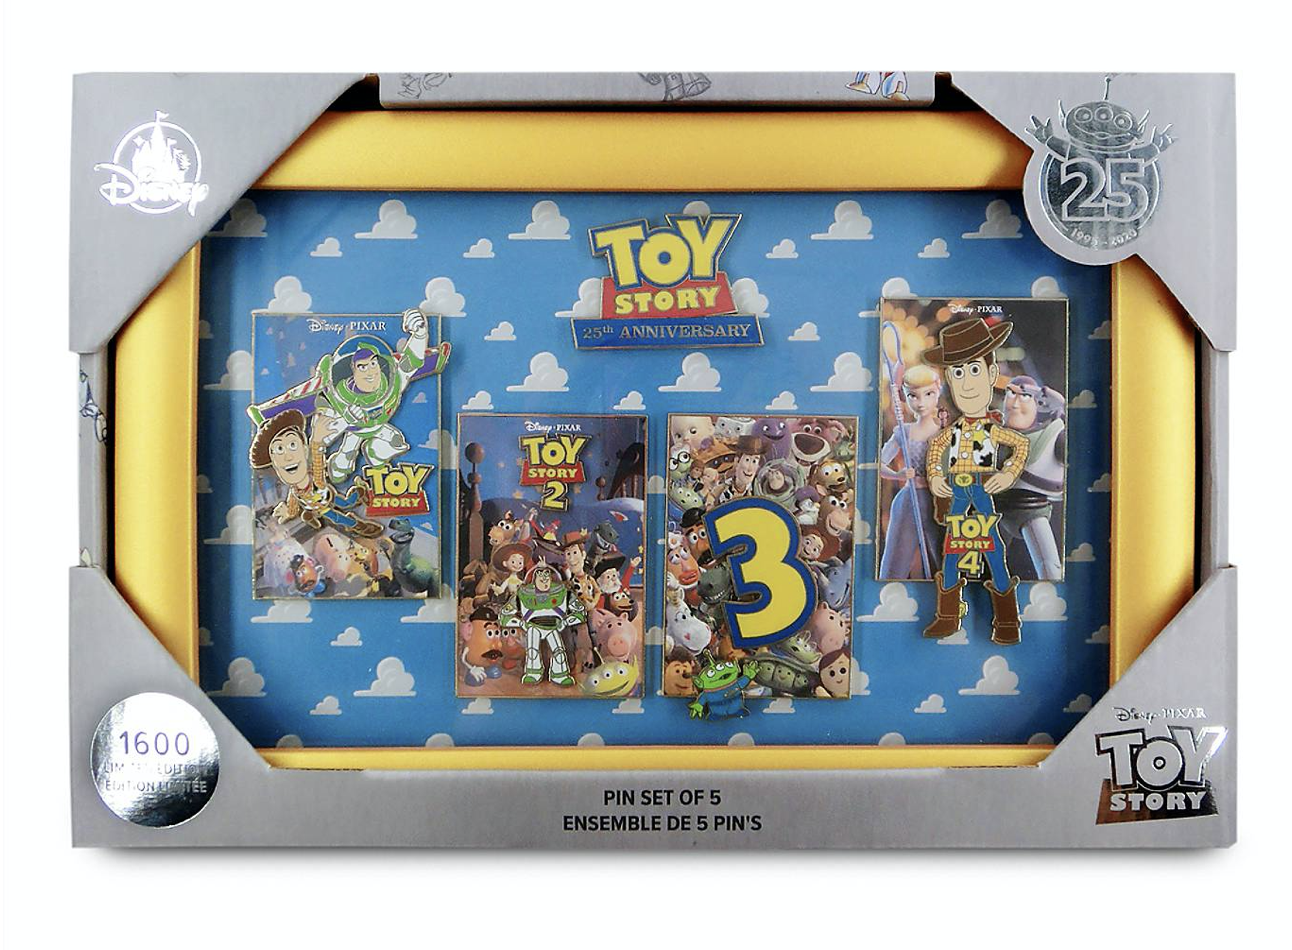 Toy Story Lanyard and Pins Set